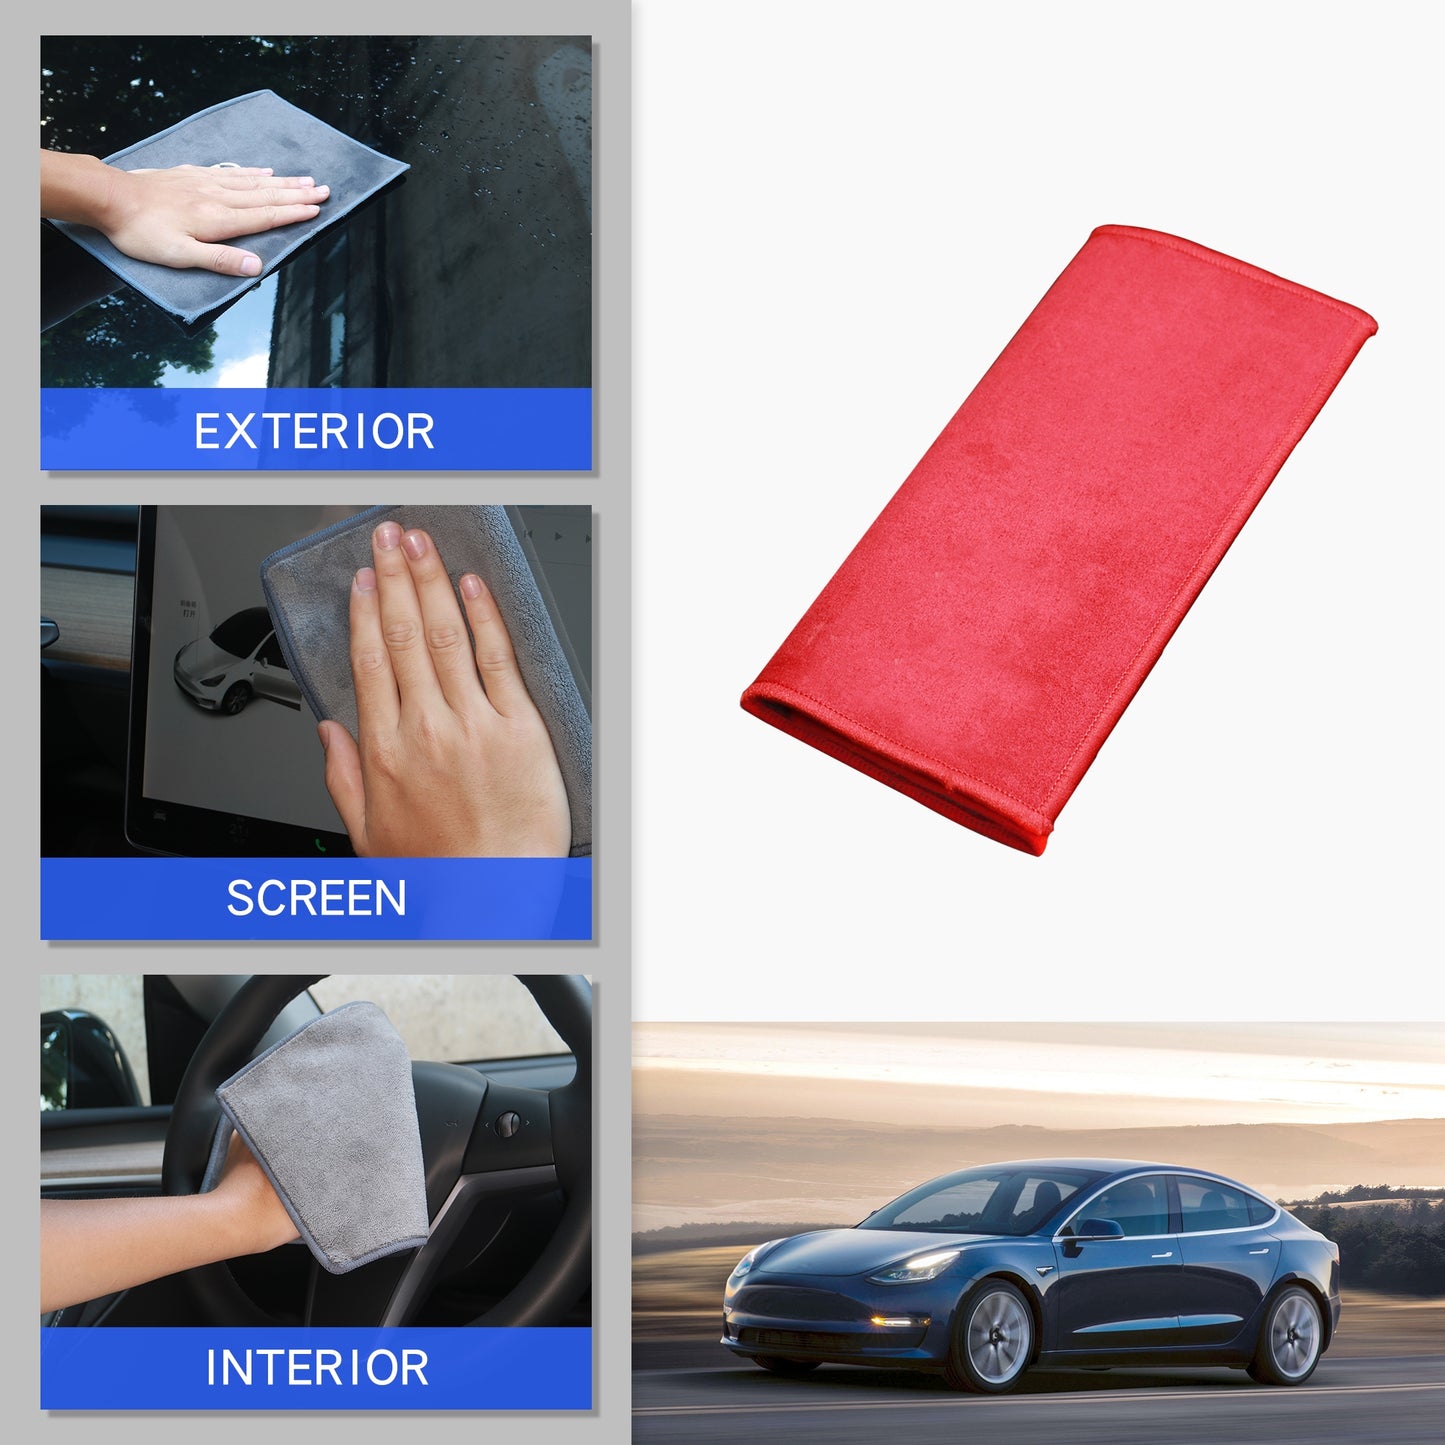 Car Wash Towel Car interior Decoration Supplies Absorbent rag (1 pair) for All Tesla Model S/3/X/Y New Model 3 Highland